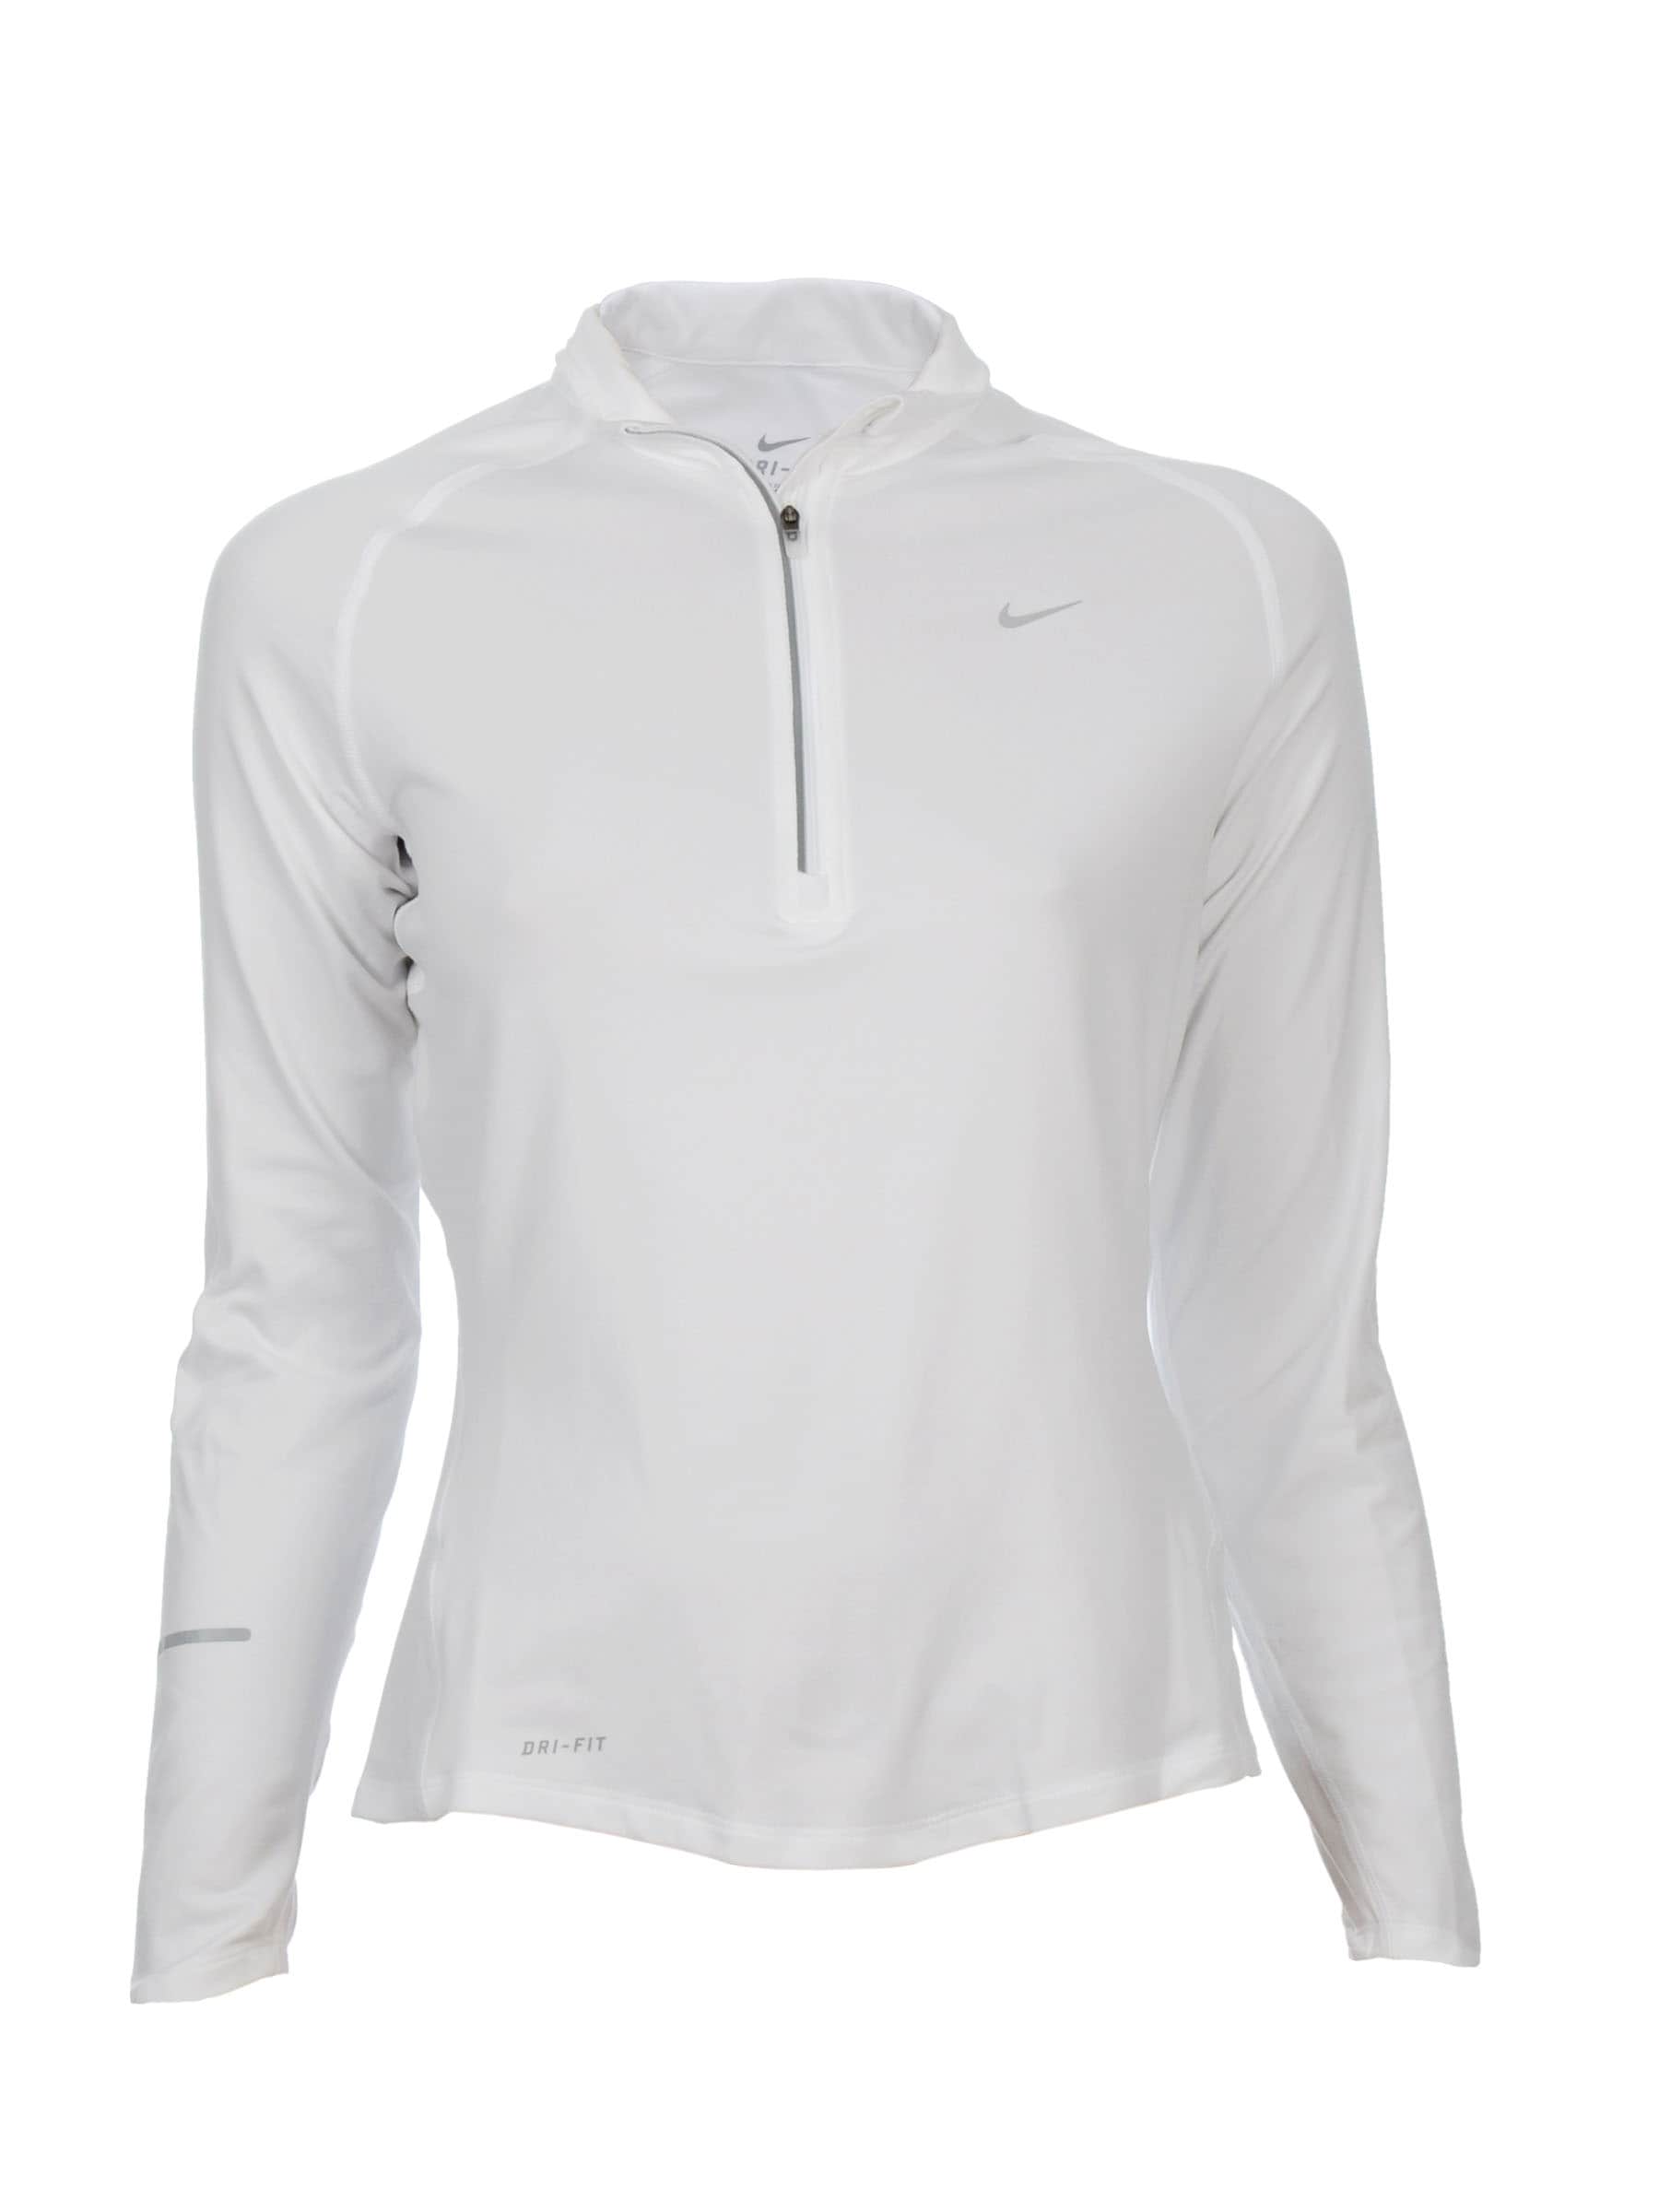 Nike Women As Nike Eleme White T-Shirt